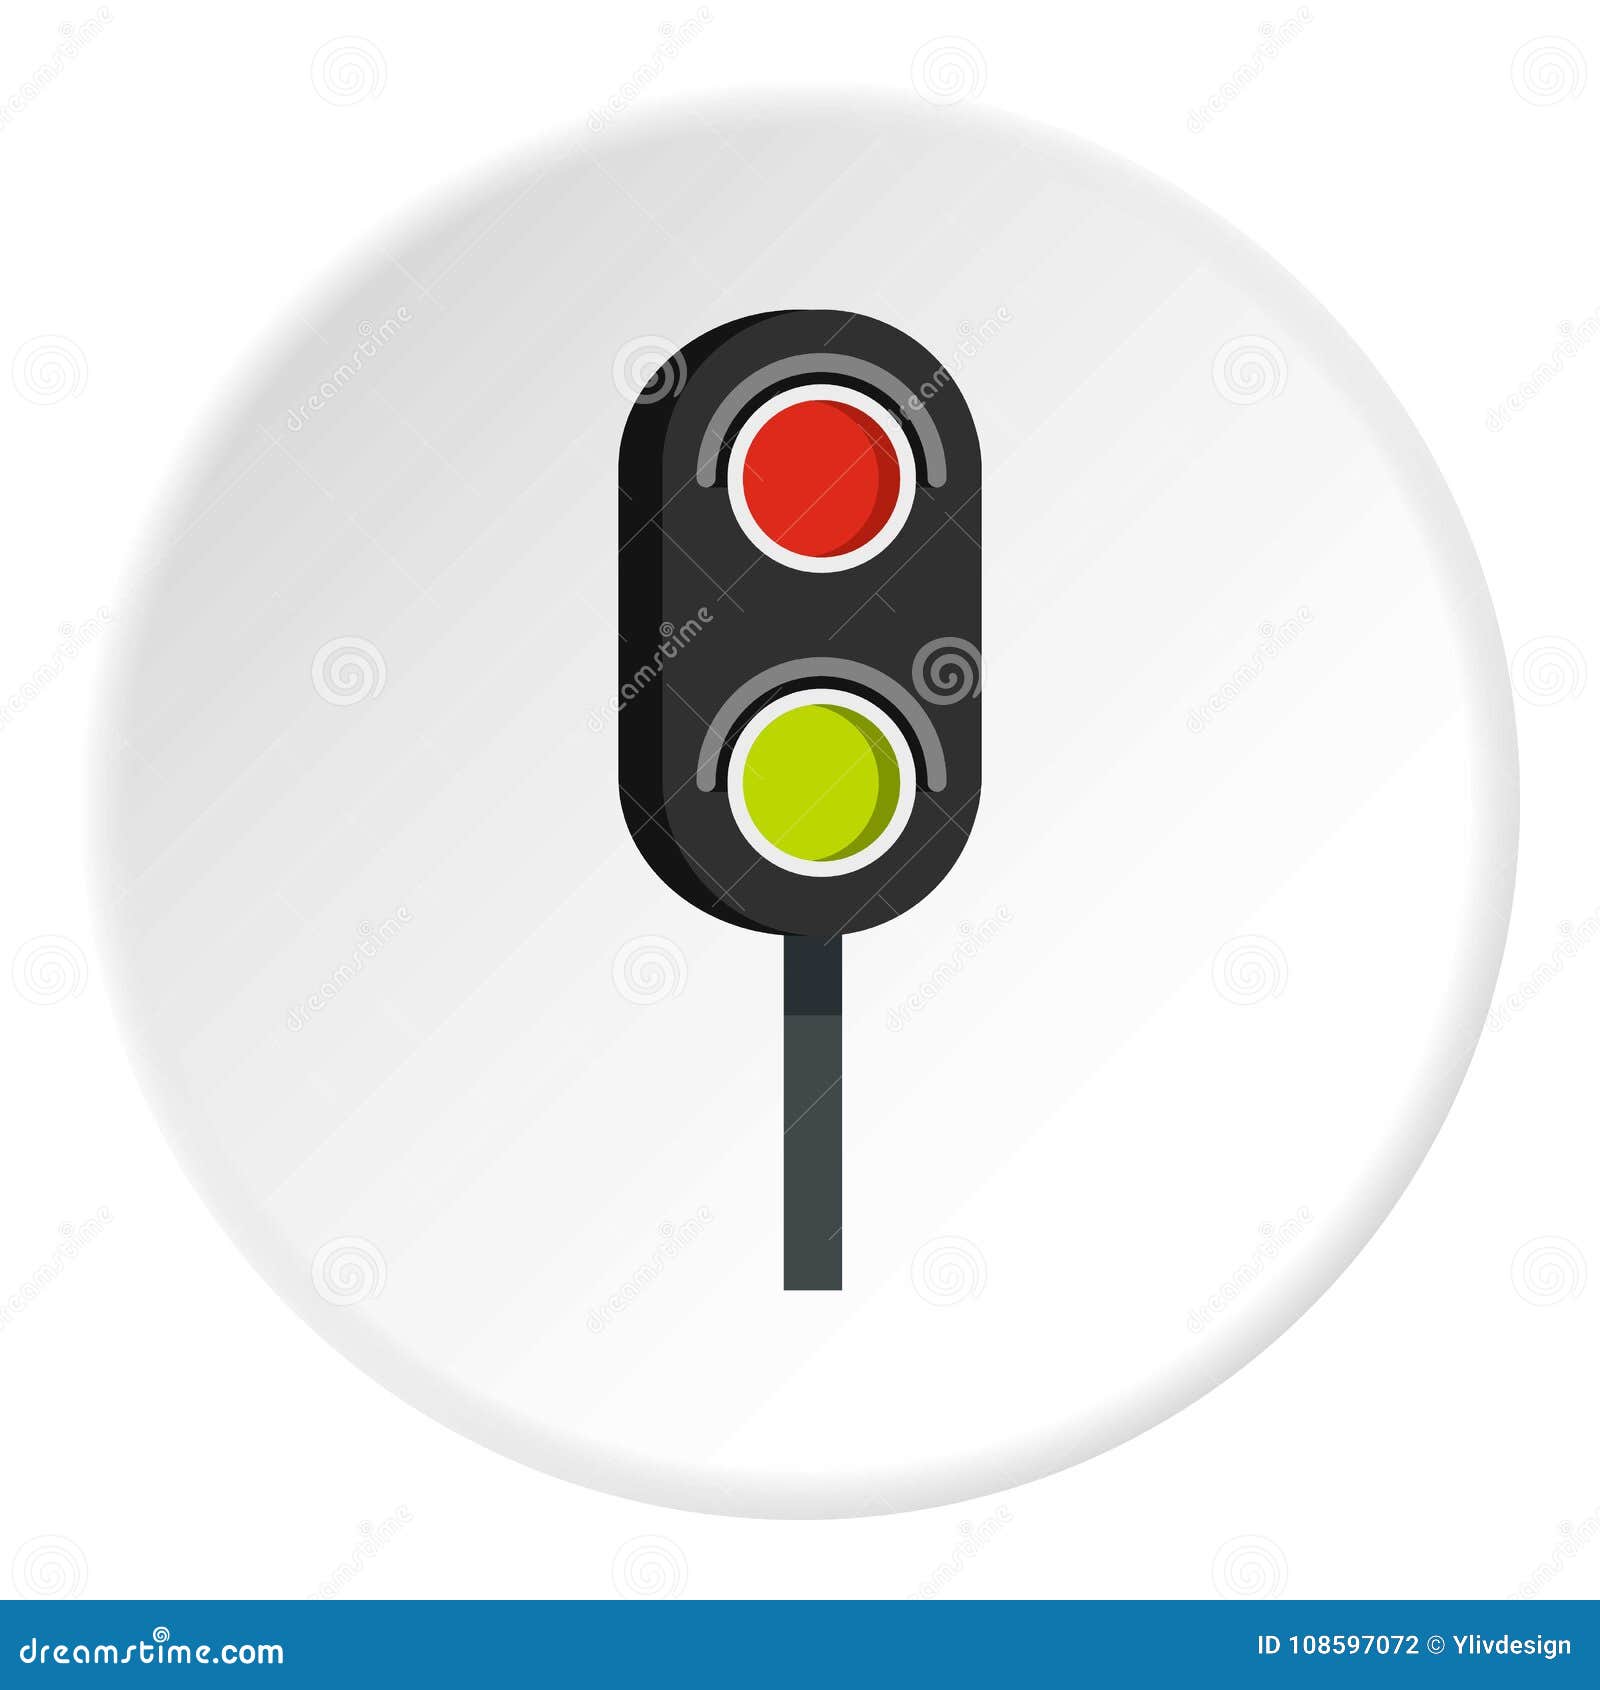 semaphore trafficlight icon circle